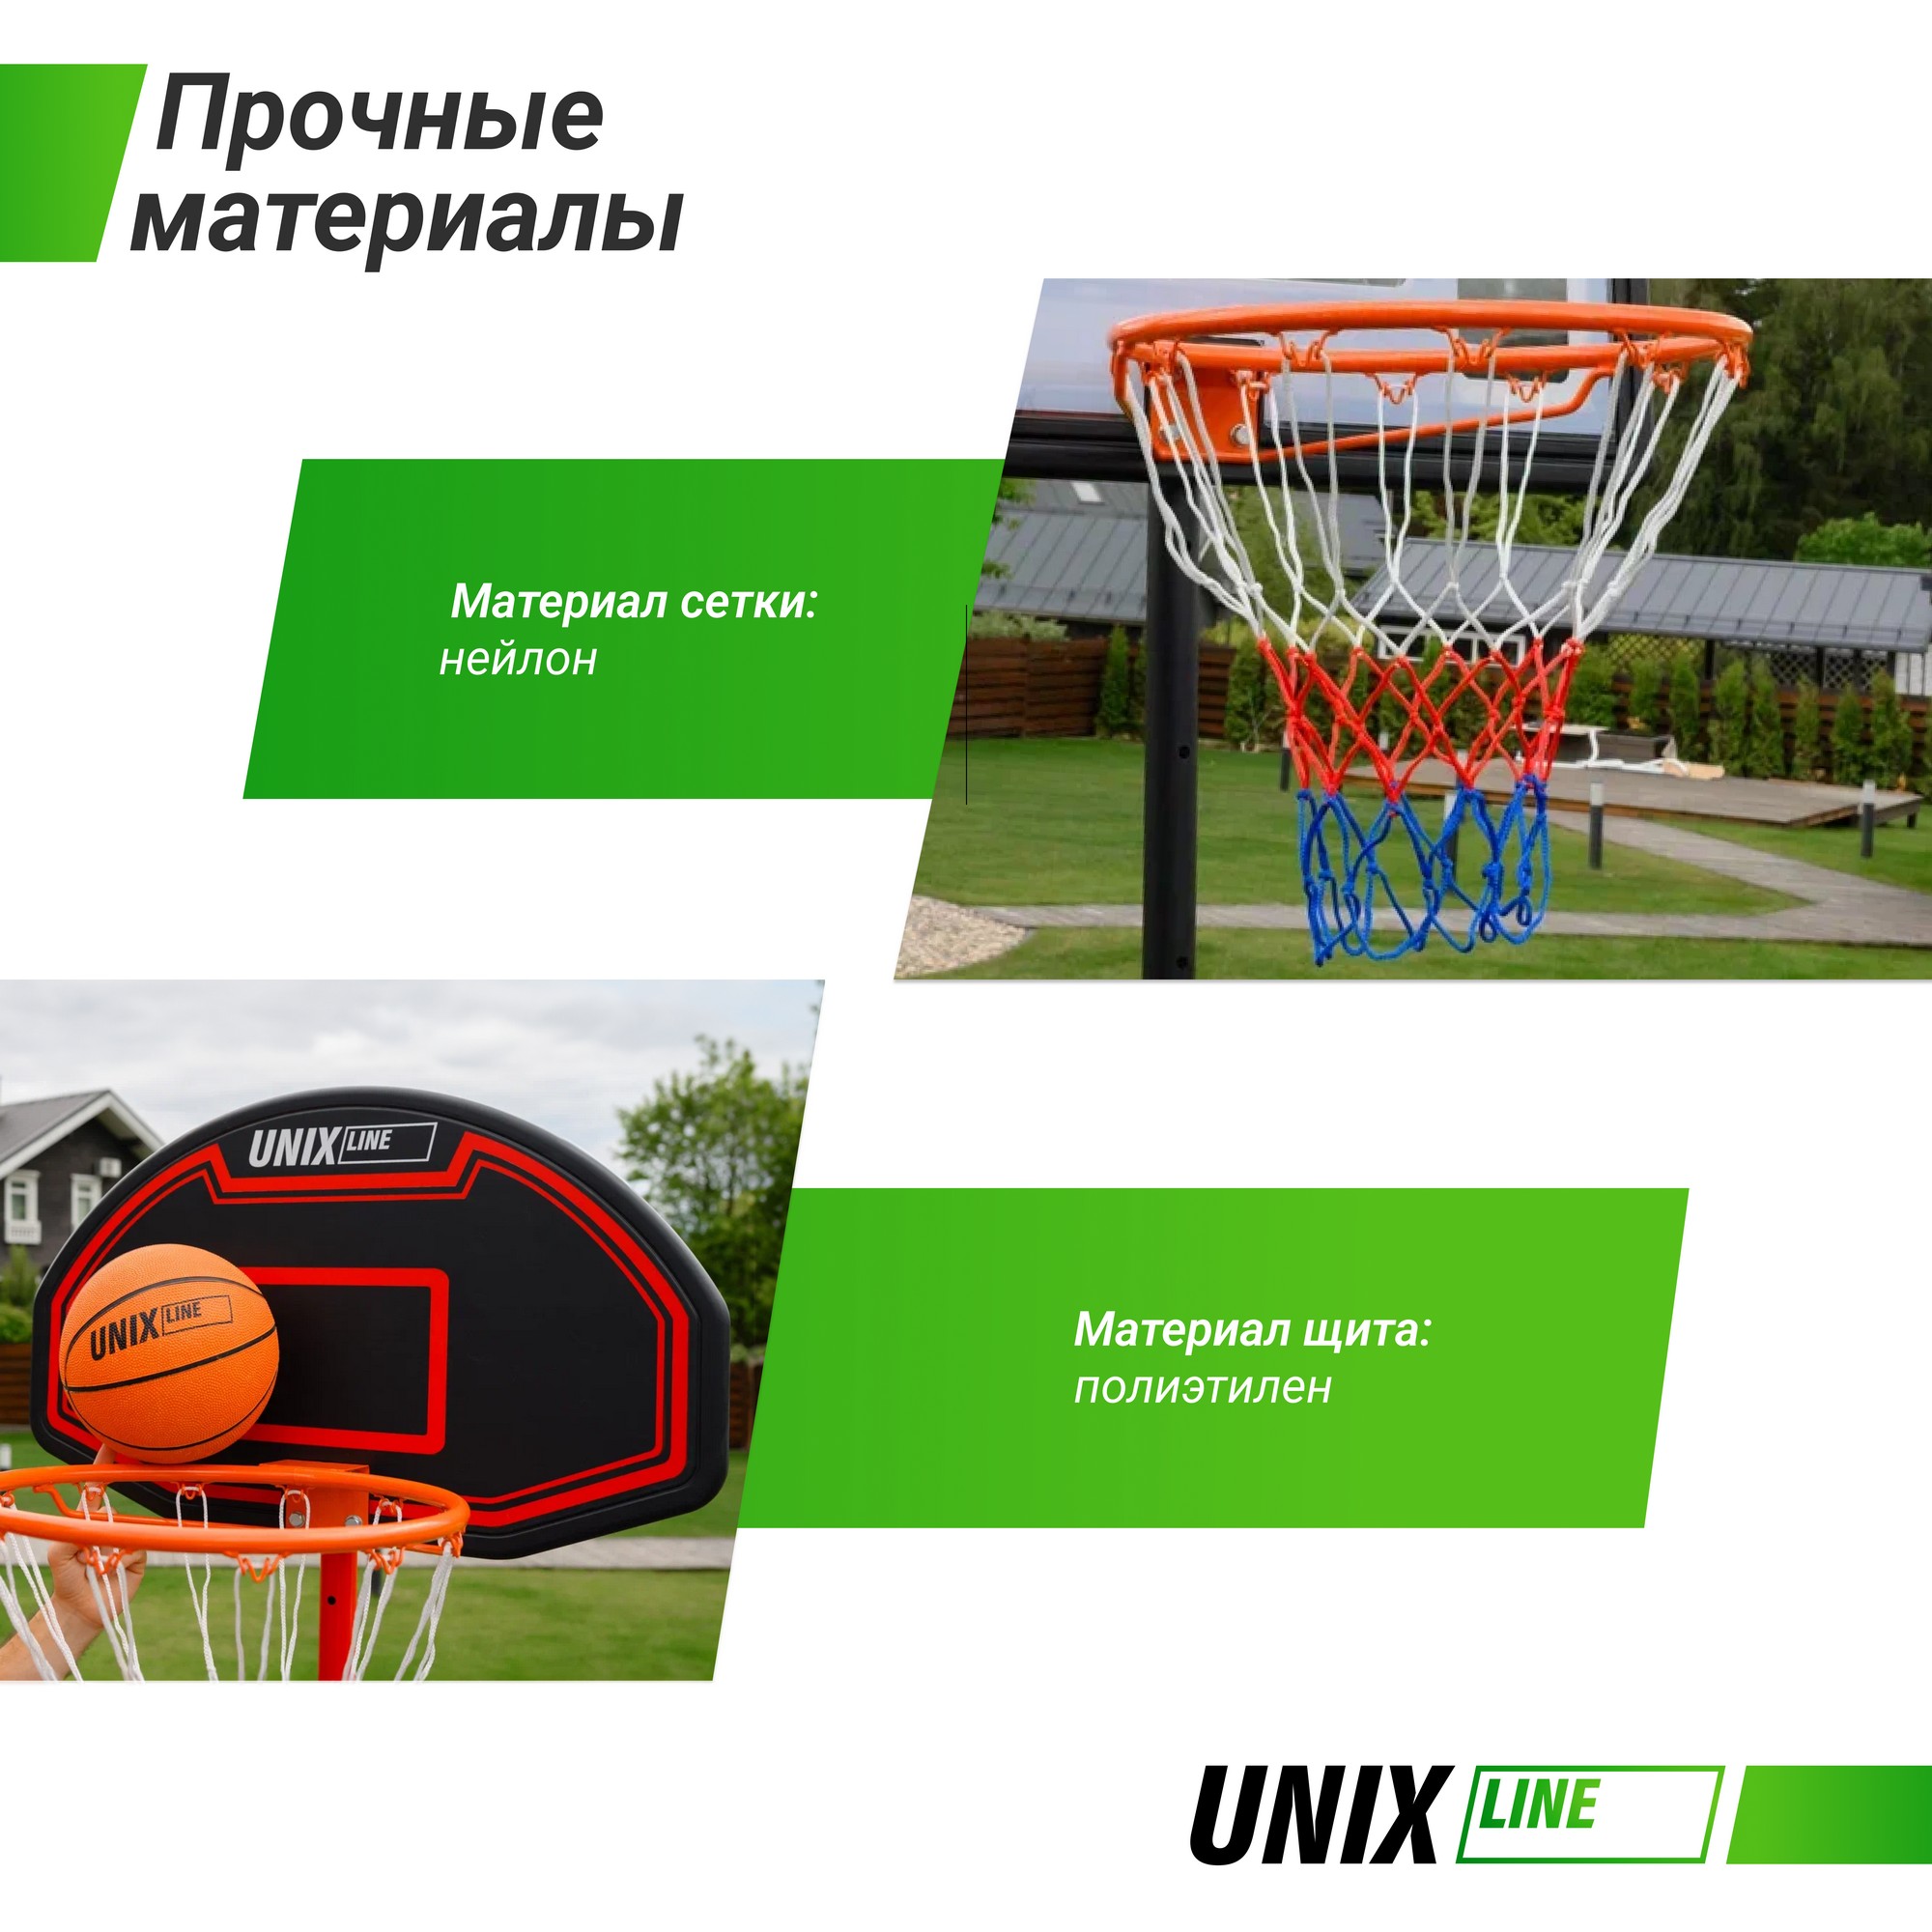 Баскетбольная стойка Unix Line B-Stand 30"x18" R38 H160-210cm BSTAO210BR 2000_2000